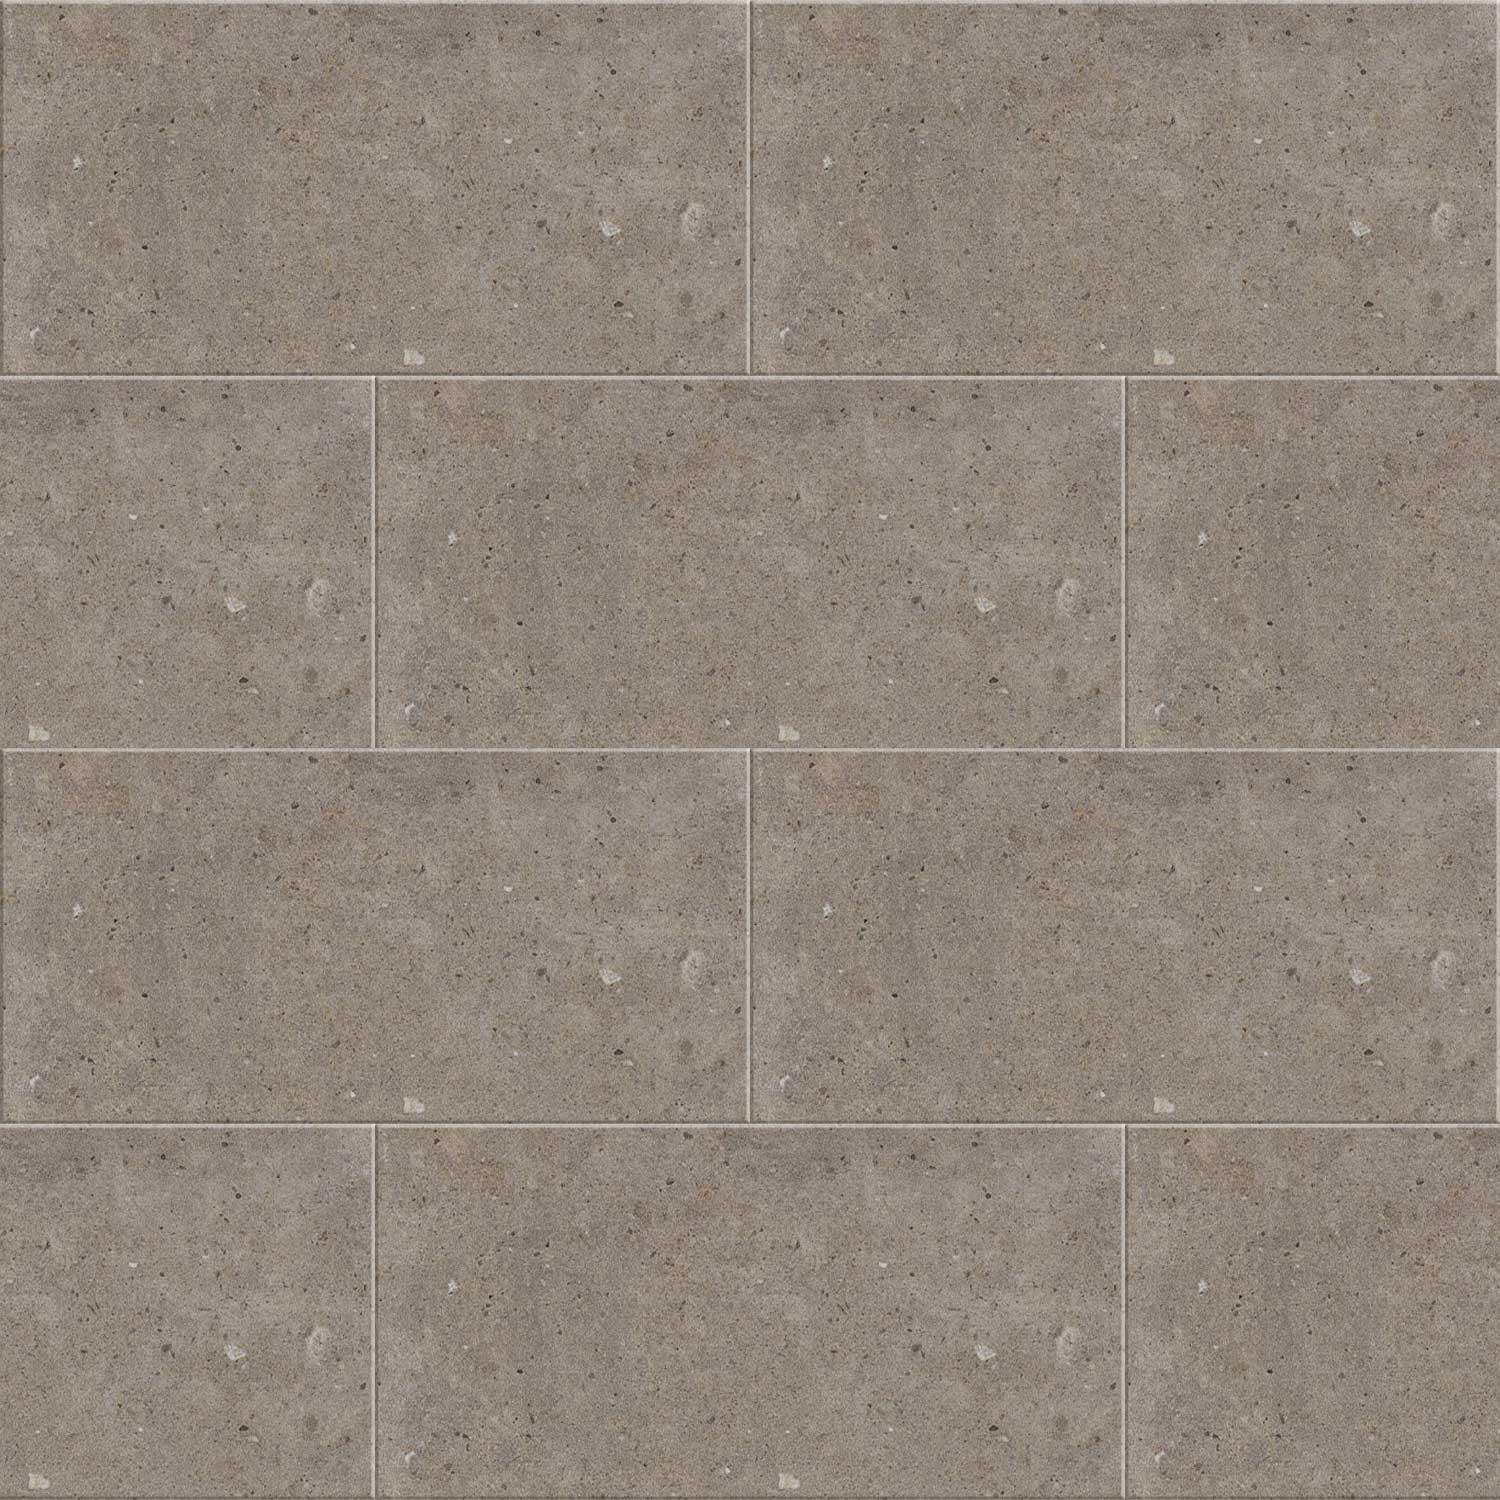 Ground Dark Grey Porcelain Tile Wall Floor Stone Effect R10 300x600mm